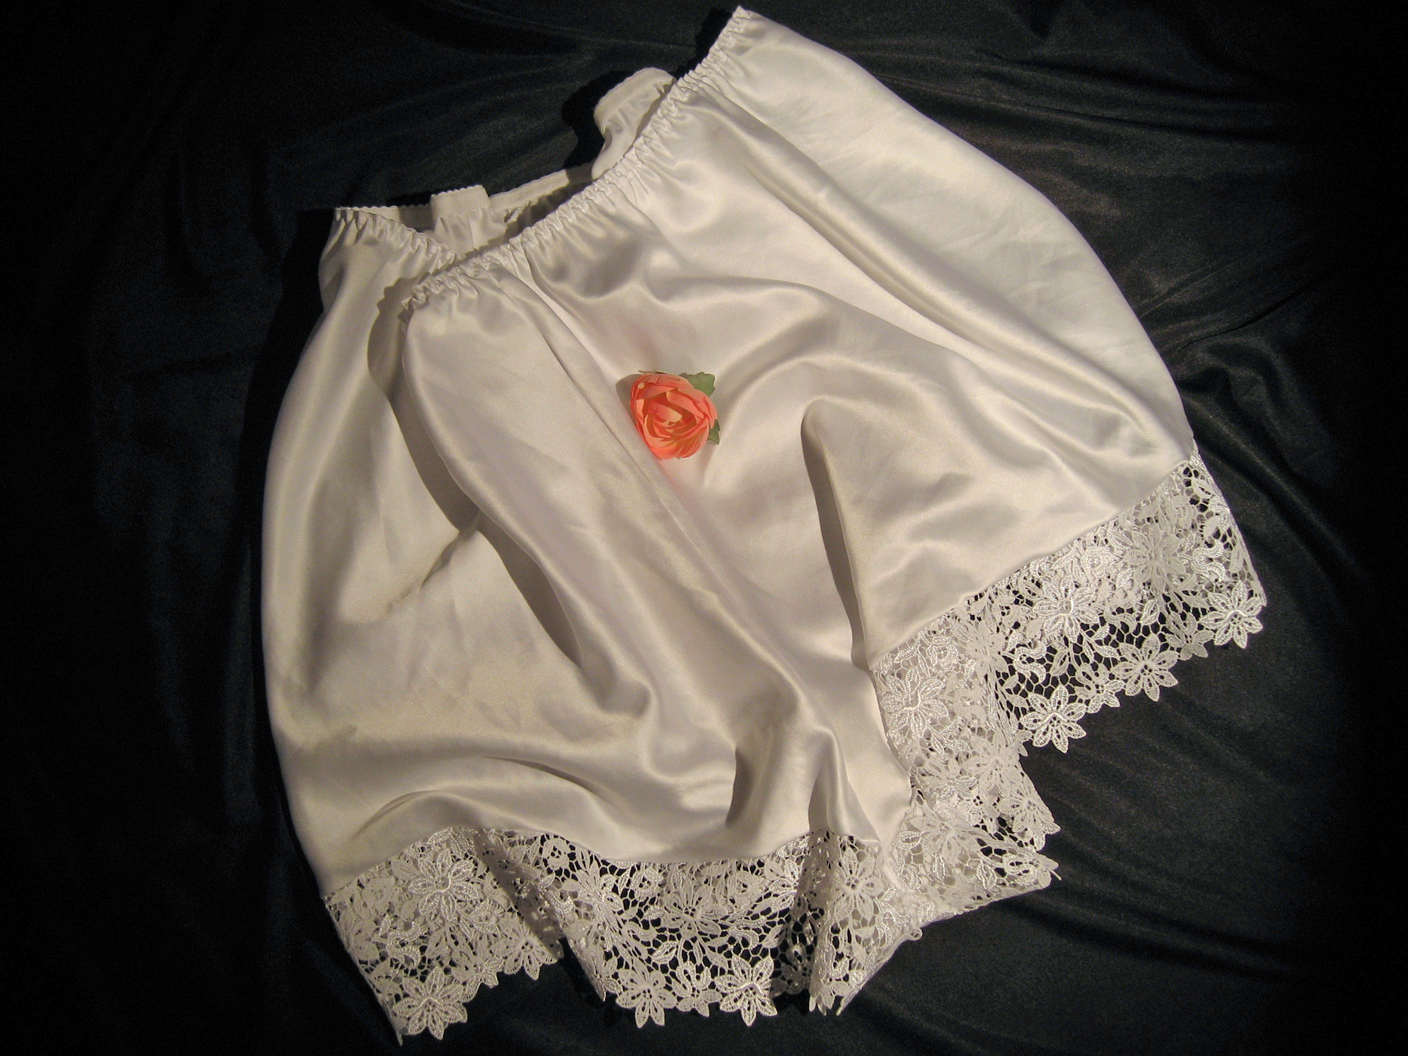 drawers skirt combination womens undergarments 1920s undies